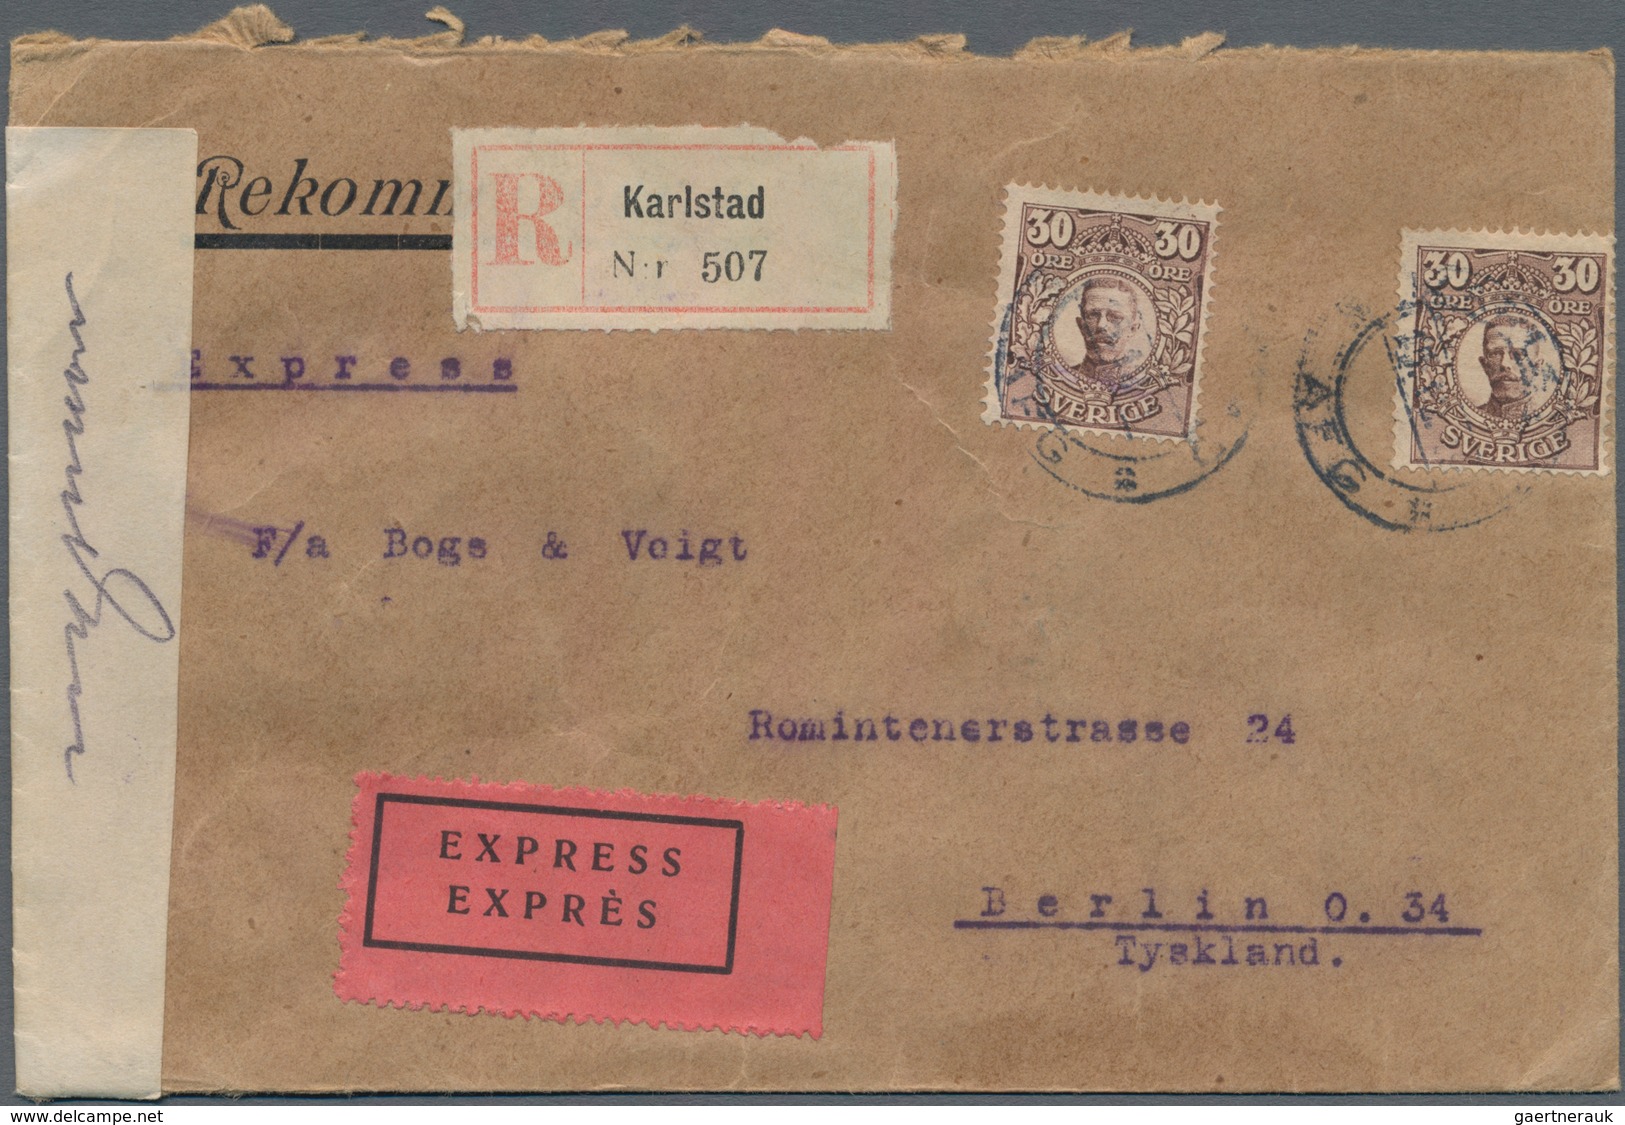 Europa: 1895/1950 (ca.), Turkey, Greece, Sweden, England Ec. Covers (ca. 37, Inc. Some Uprated Stati - Autres - Europe